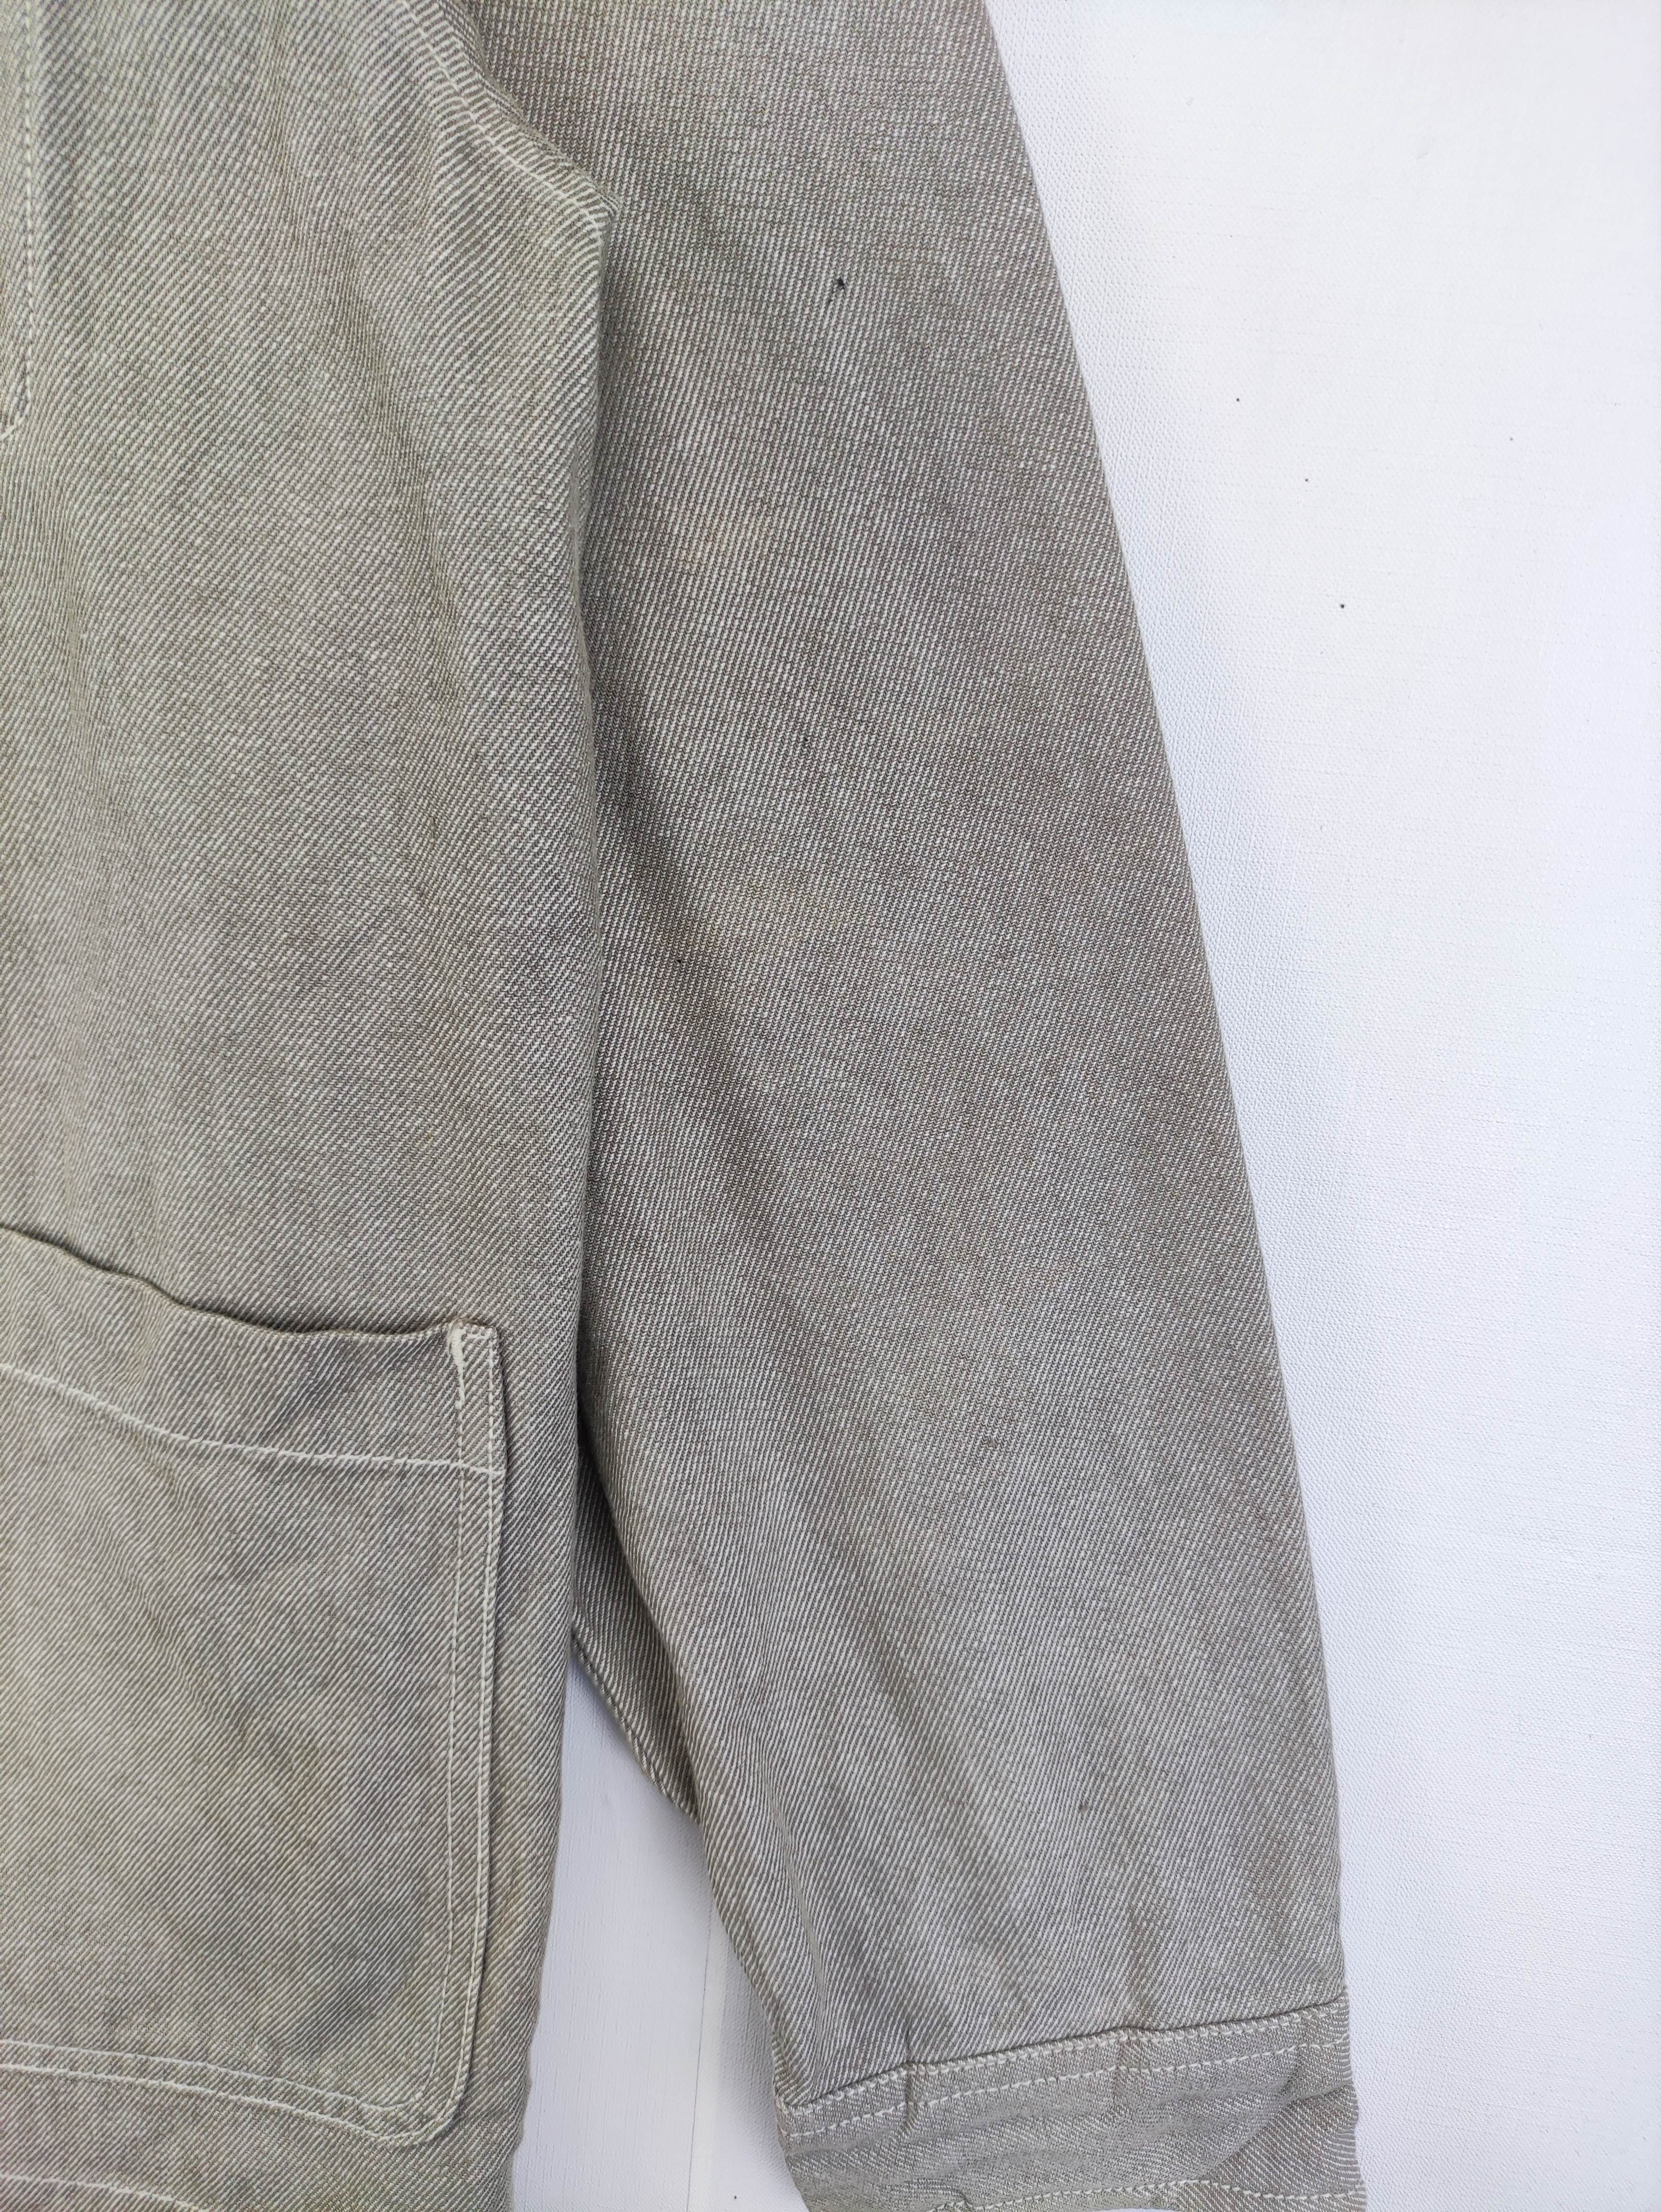 Vintage Uniqlo Chore Jacket Button Up - 2